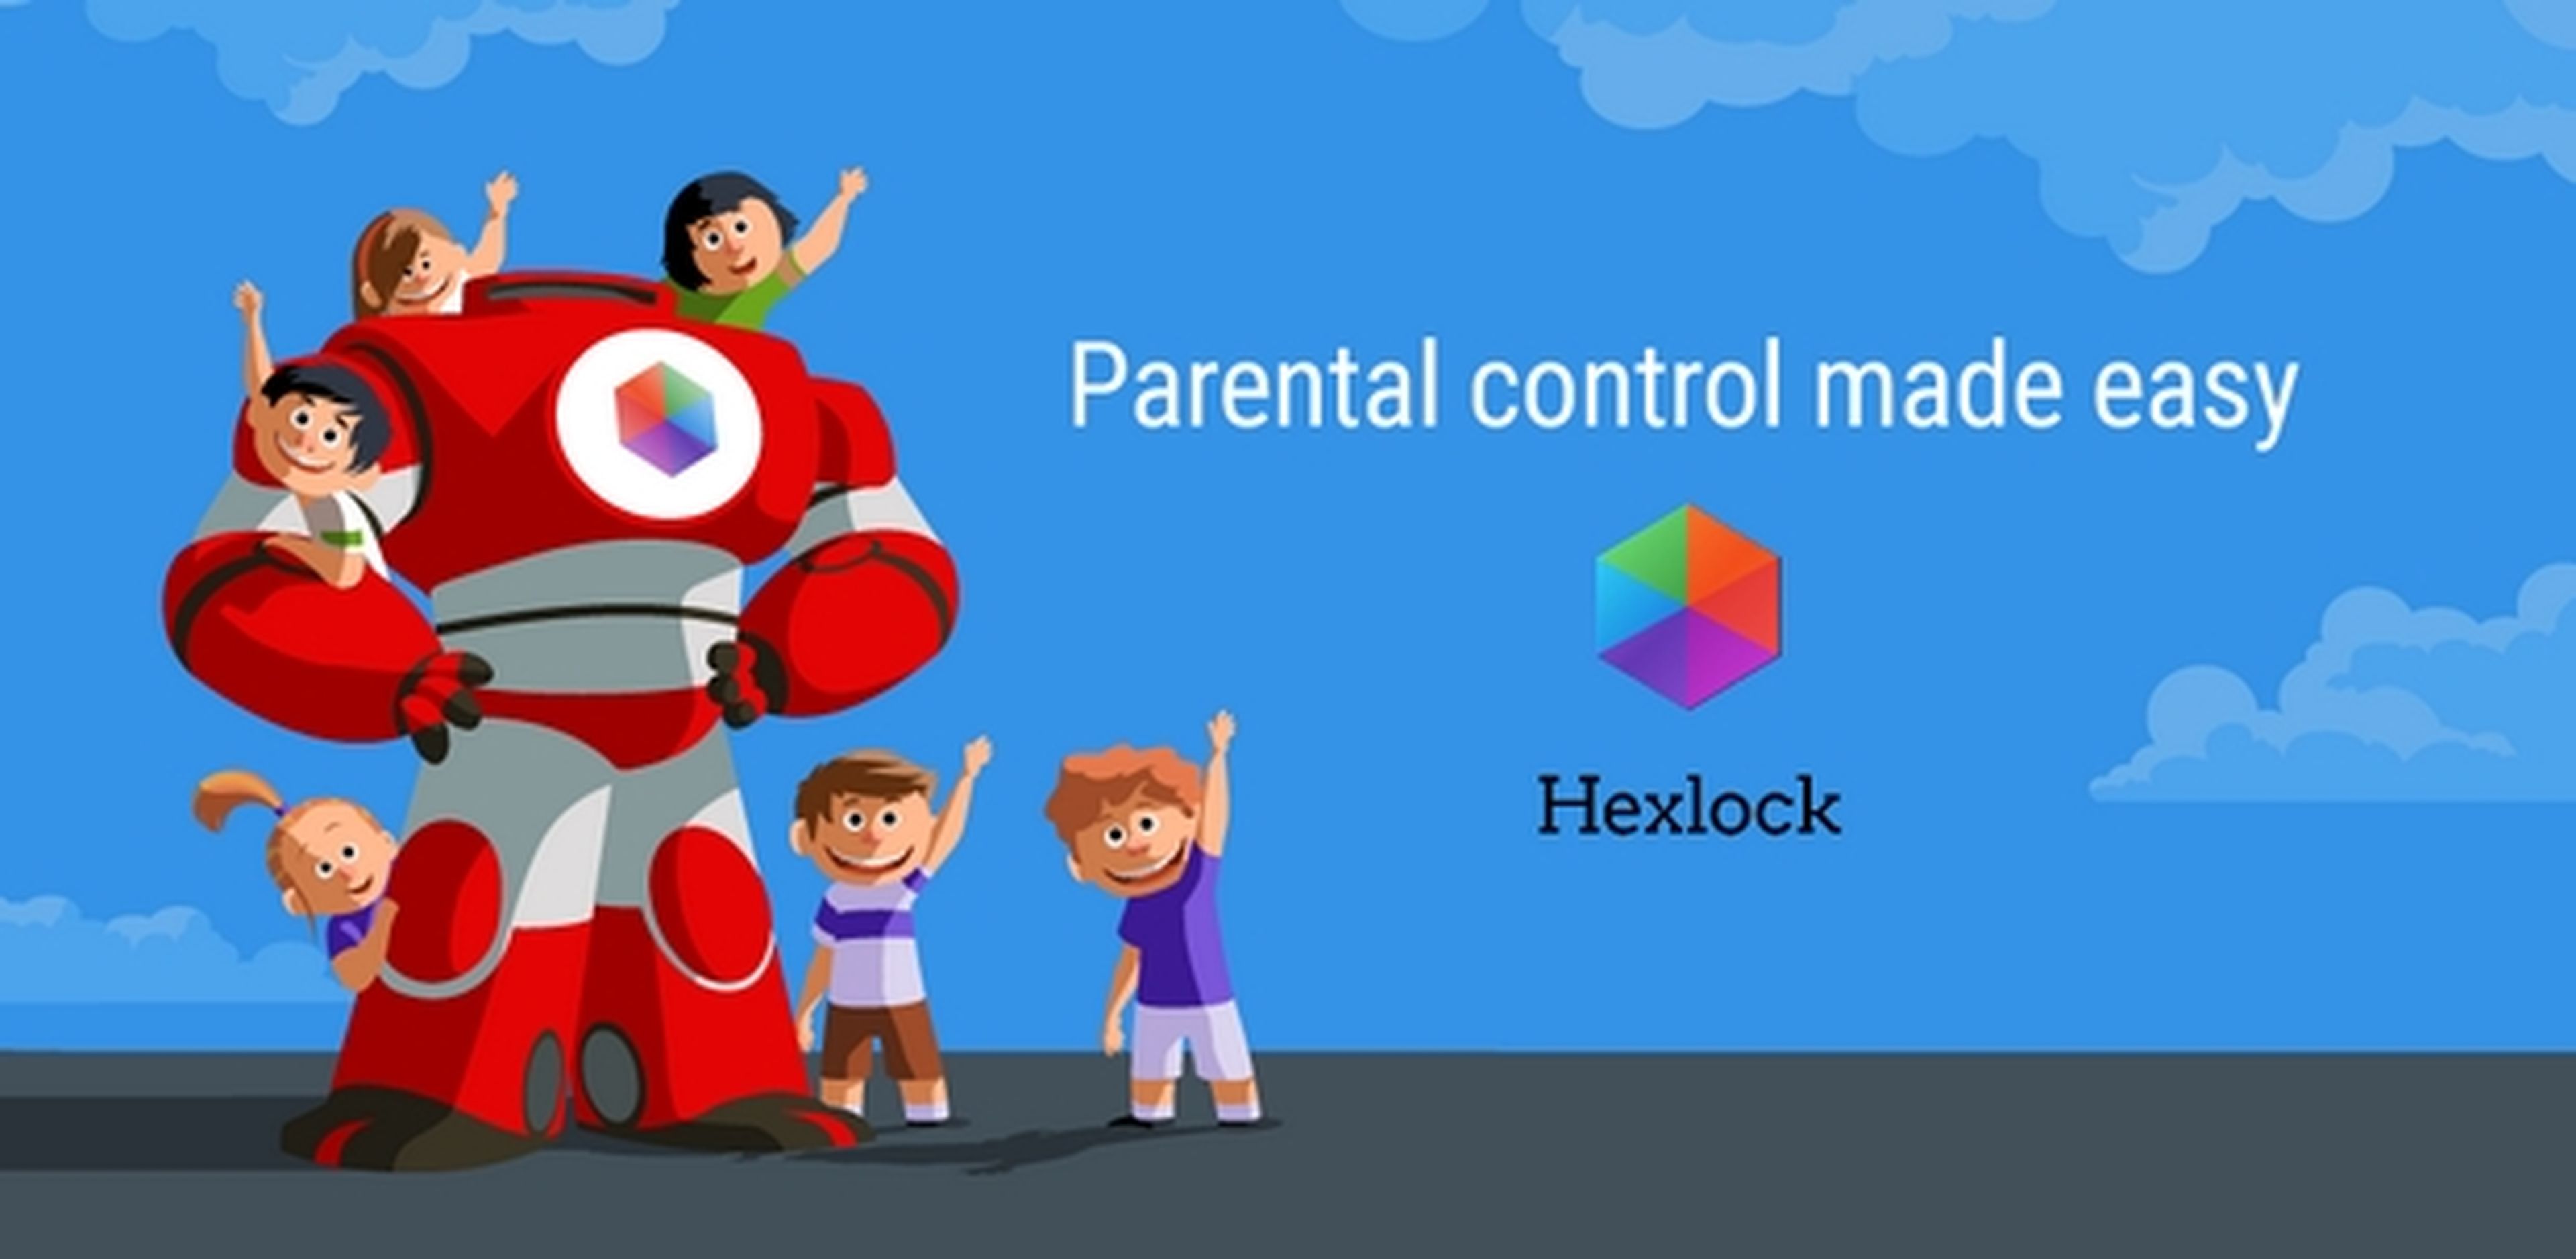 Hexlock control parental fácil